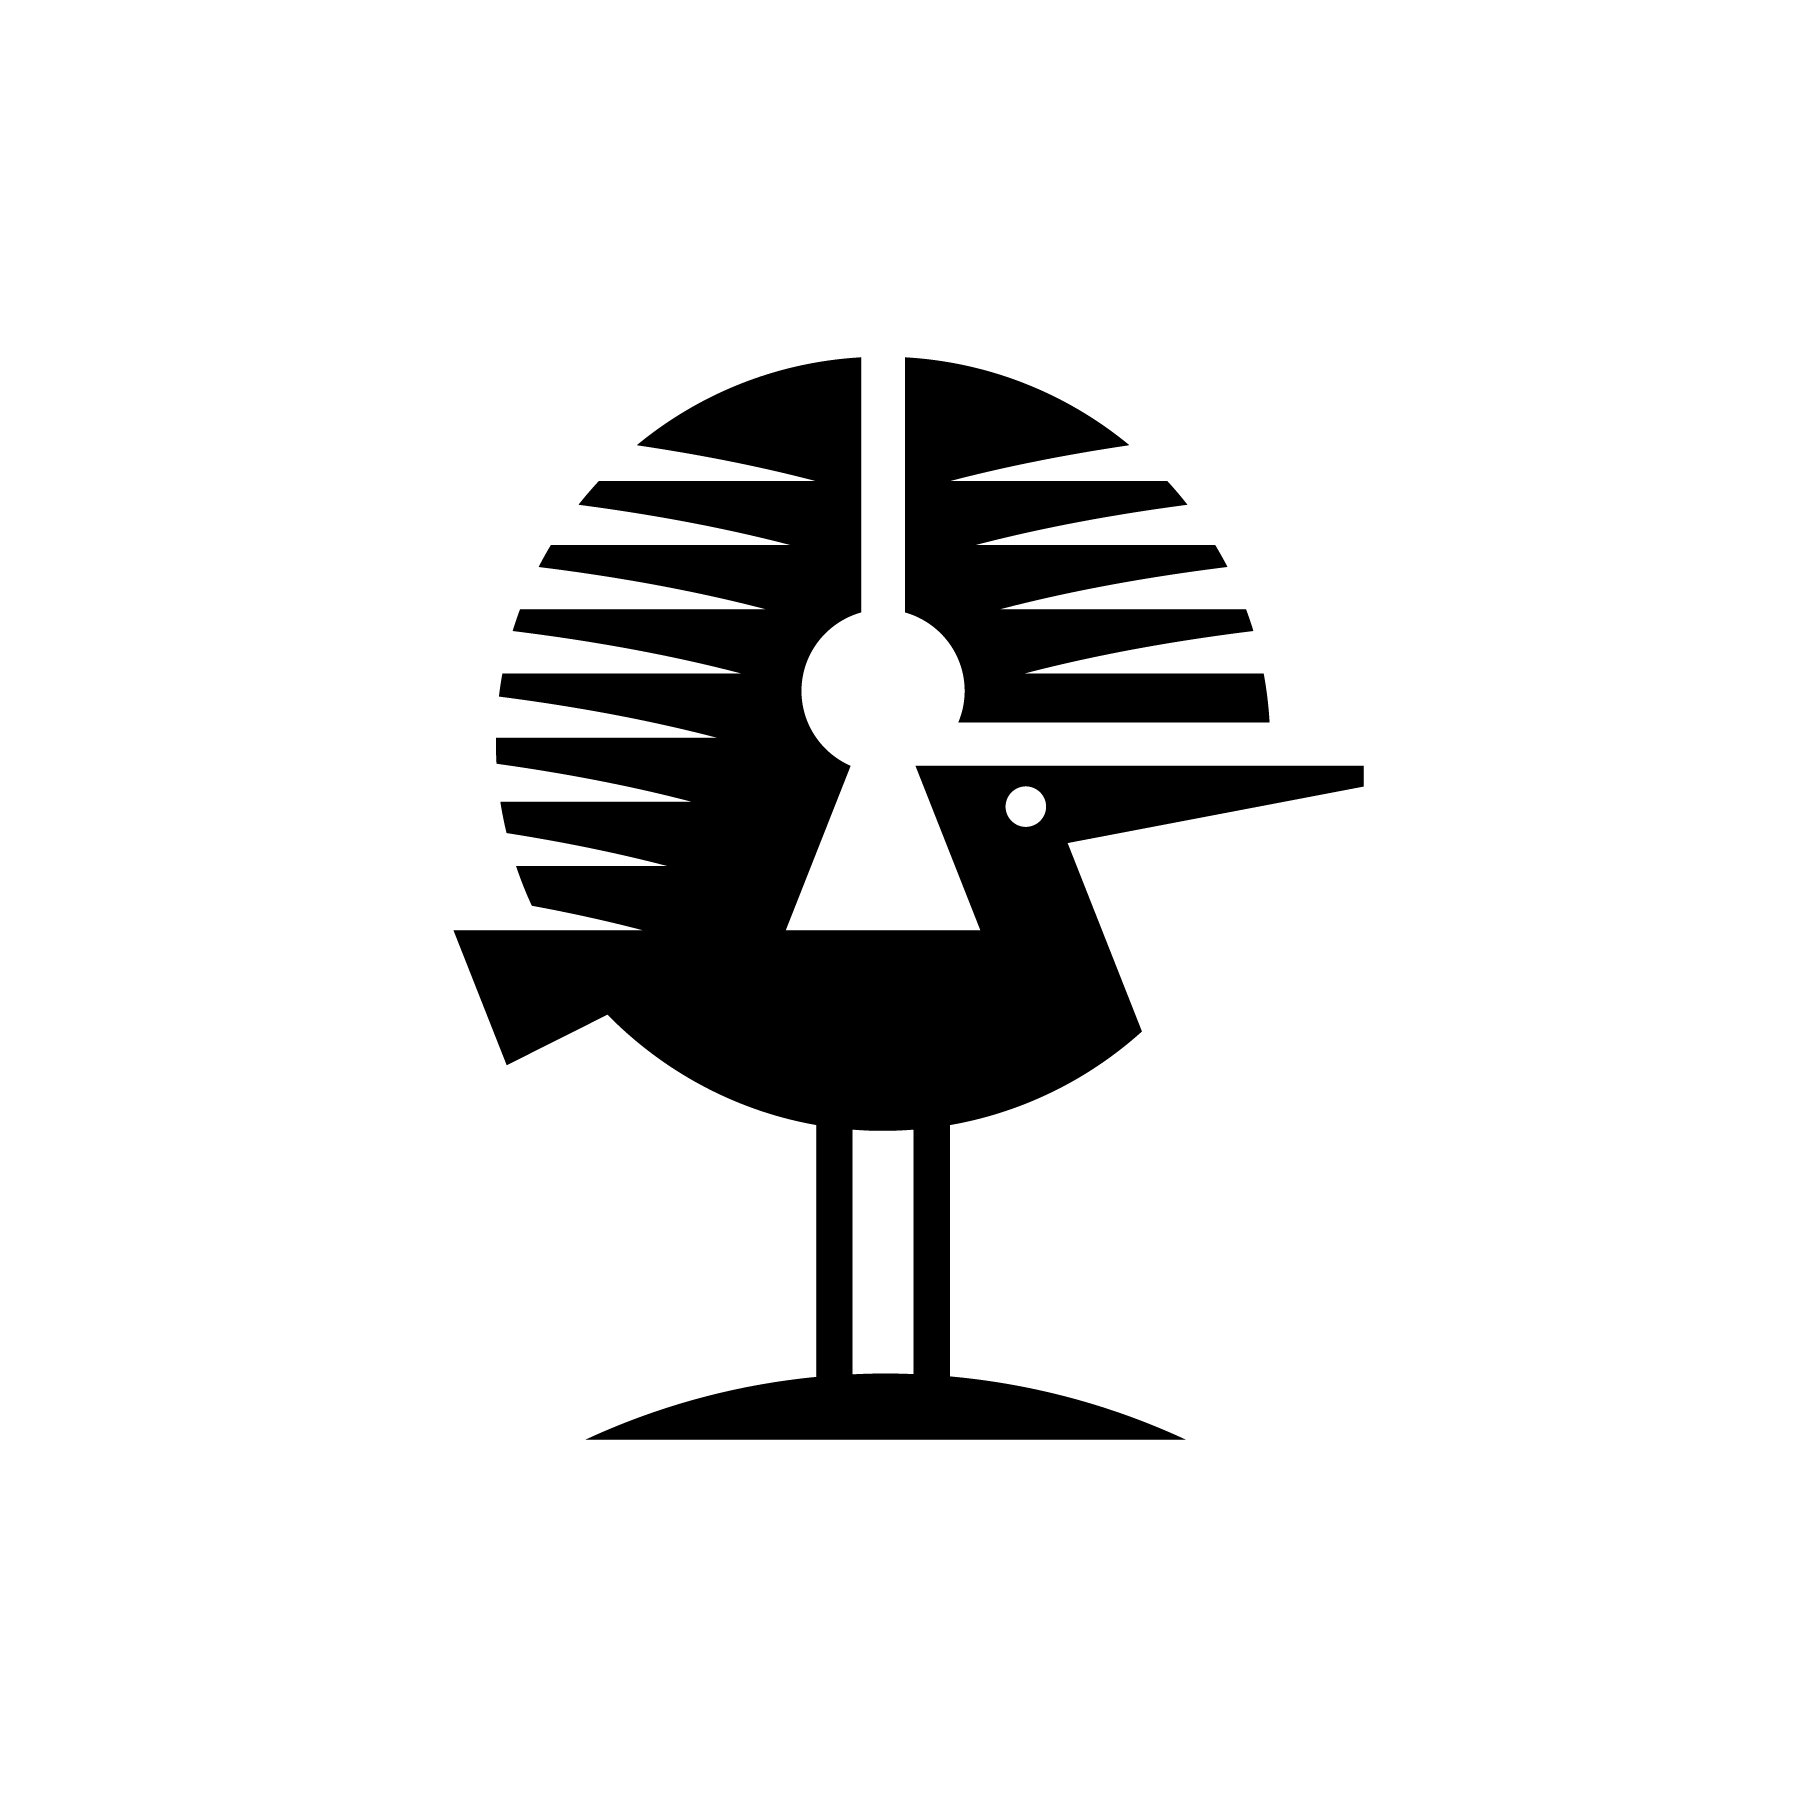 Summerland Key logo design by logo designer Penda Design for your inspiration and for the worlds largest logo competition